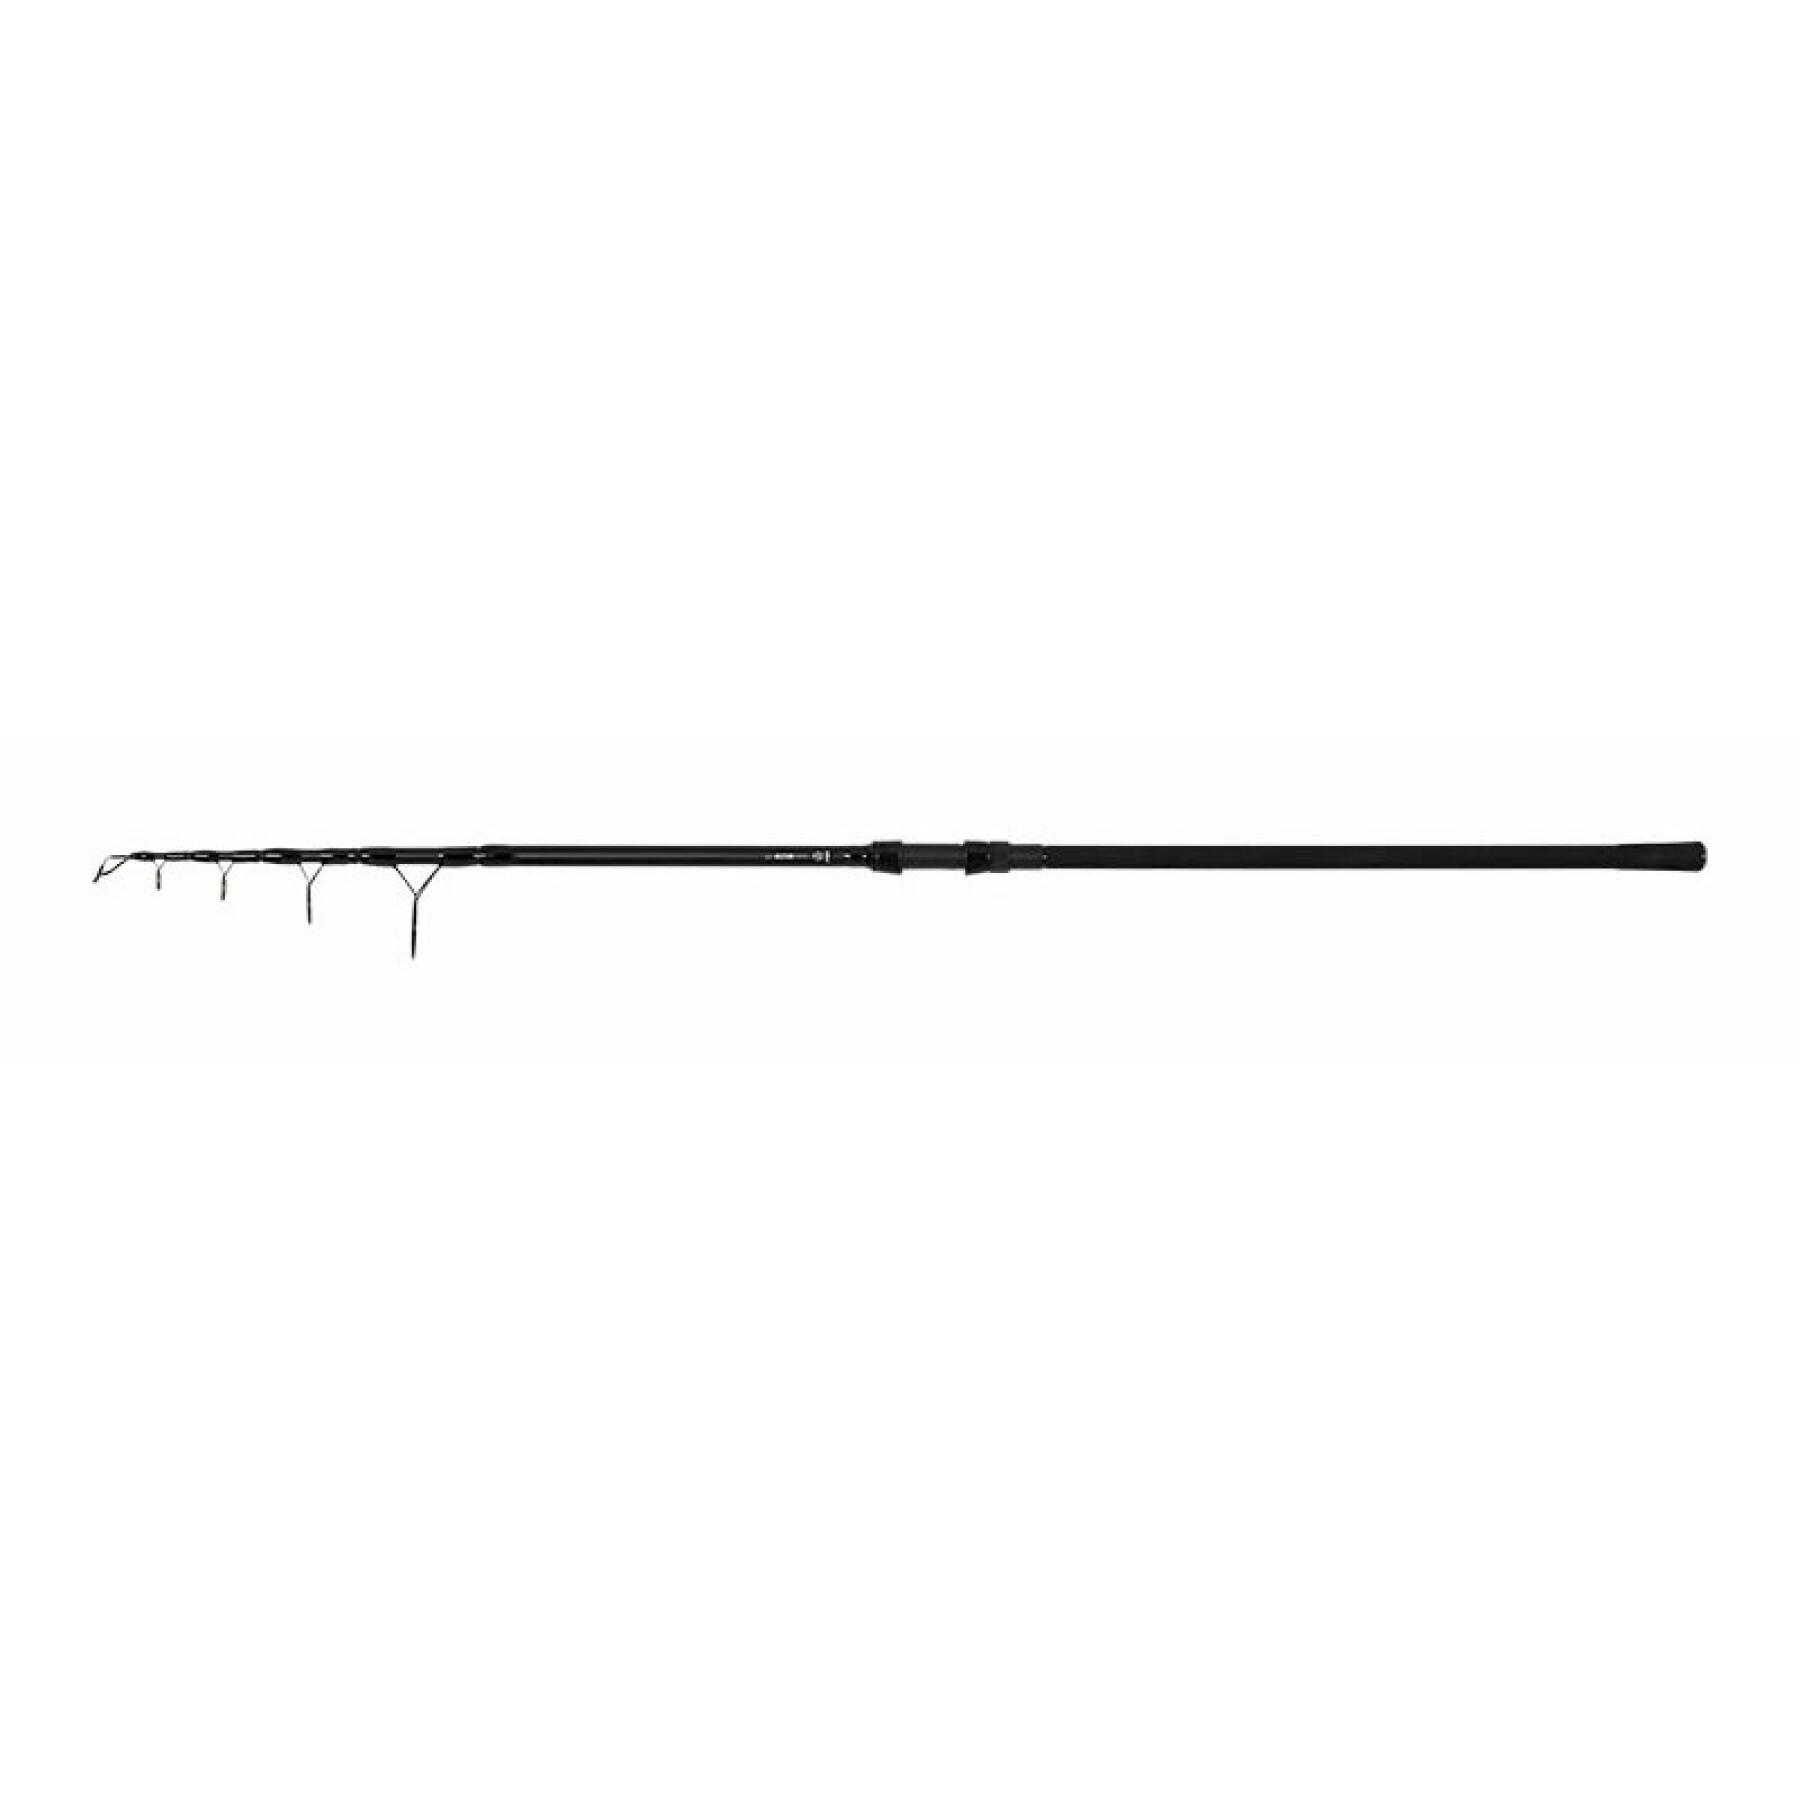 Pro telescopic fishing rod Fox EOS 12ft 3.5lb